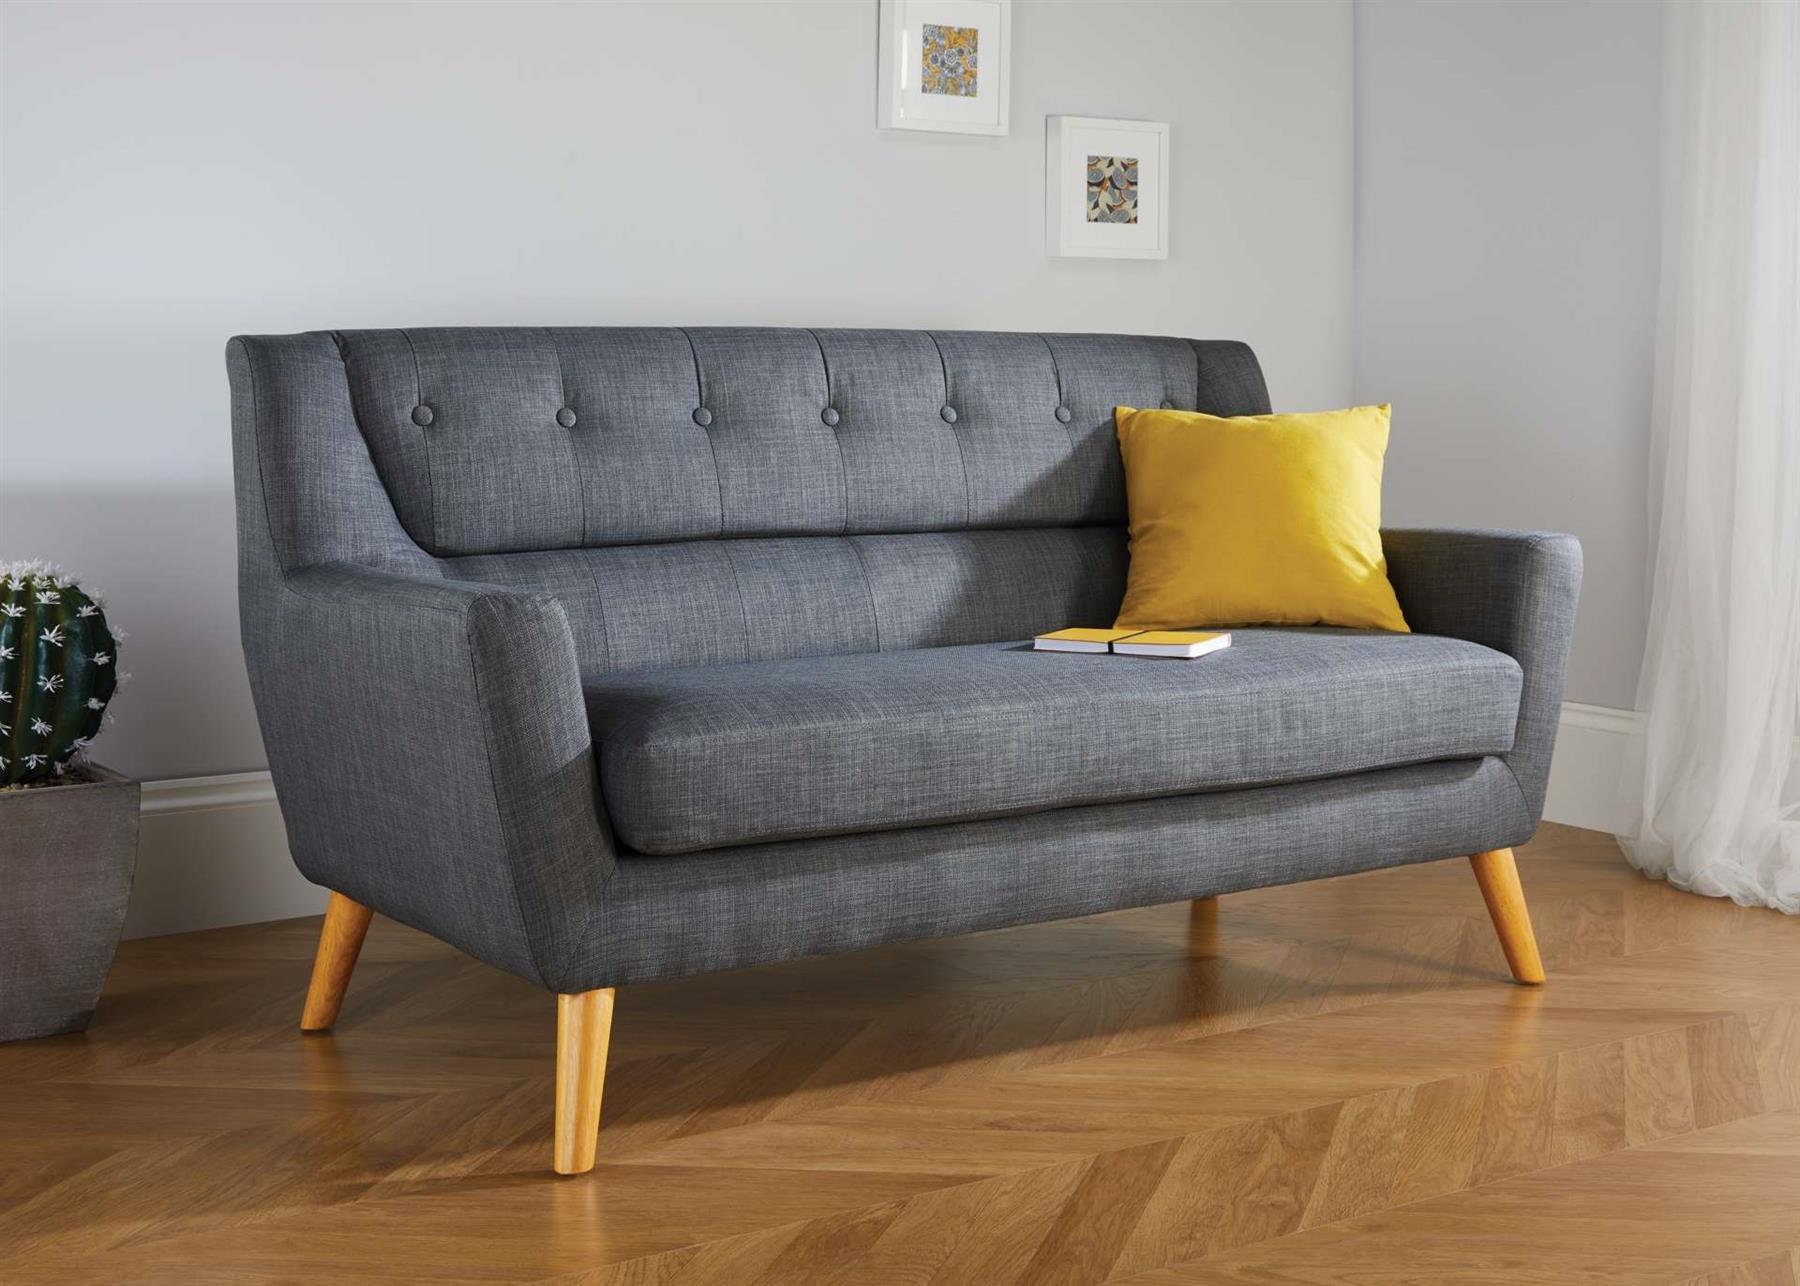 3 Seater Sofa Birlea Lambeth Settee Modern Retro Style Fabric Wood Legs